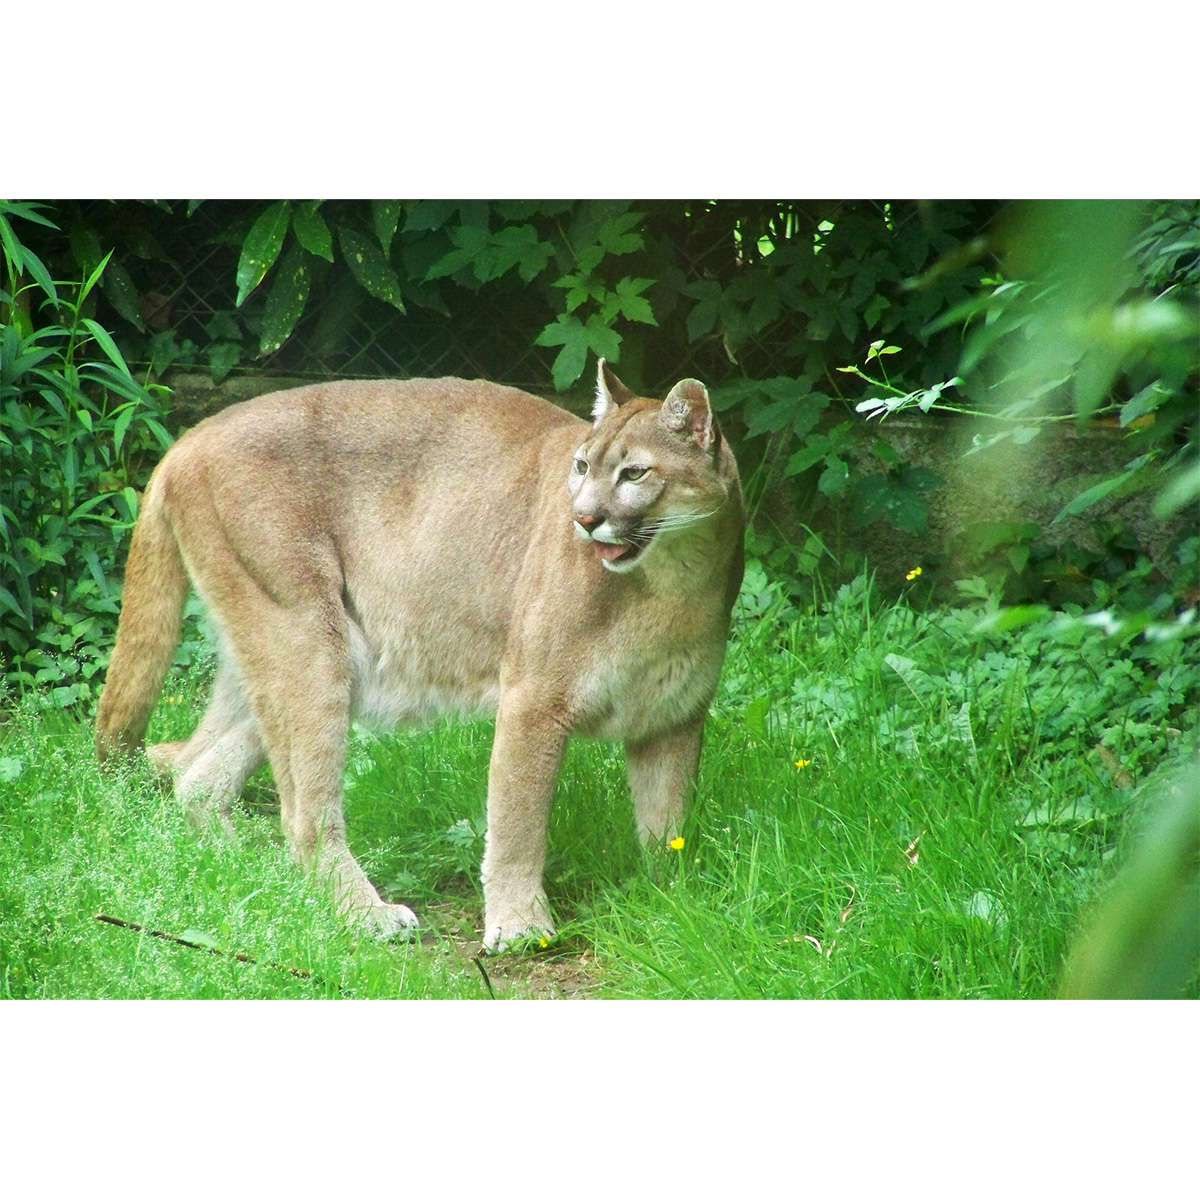 Пума / Горный лев / Кугуар (Puma concolor) Фото №3